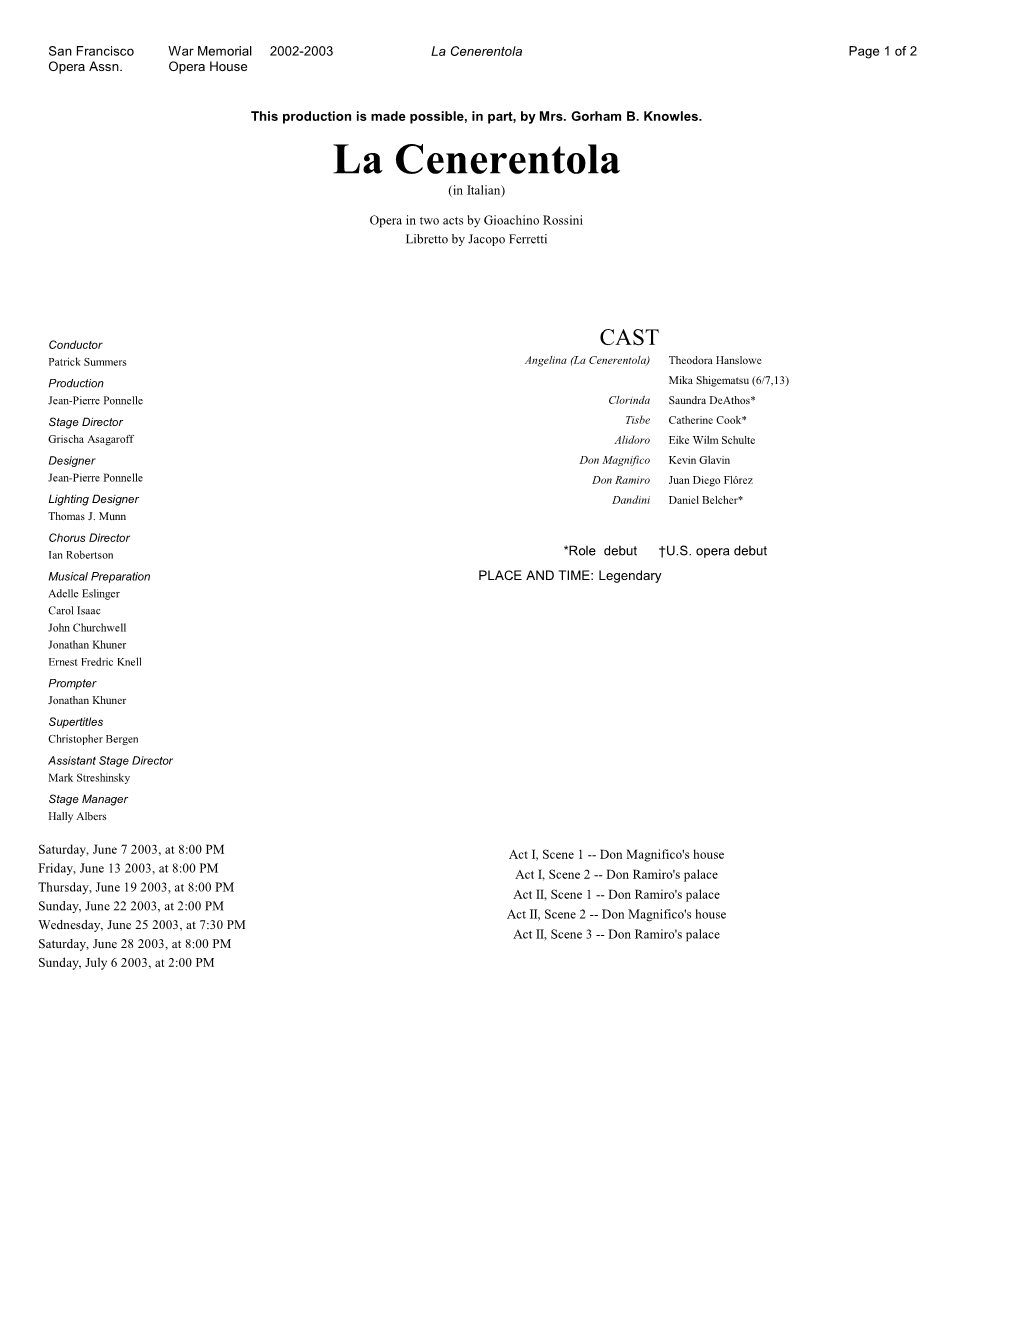 La Cenerentola Page 1 of 2 Opera Assn